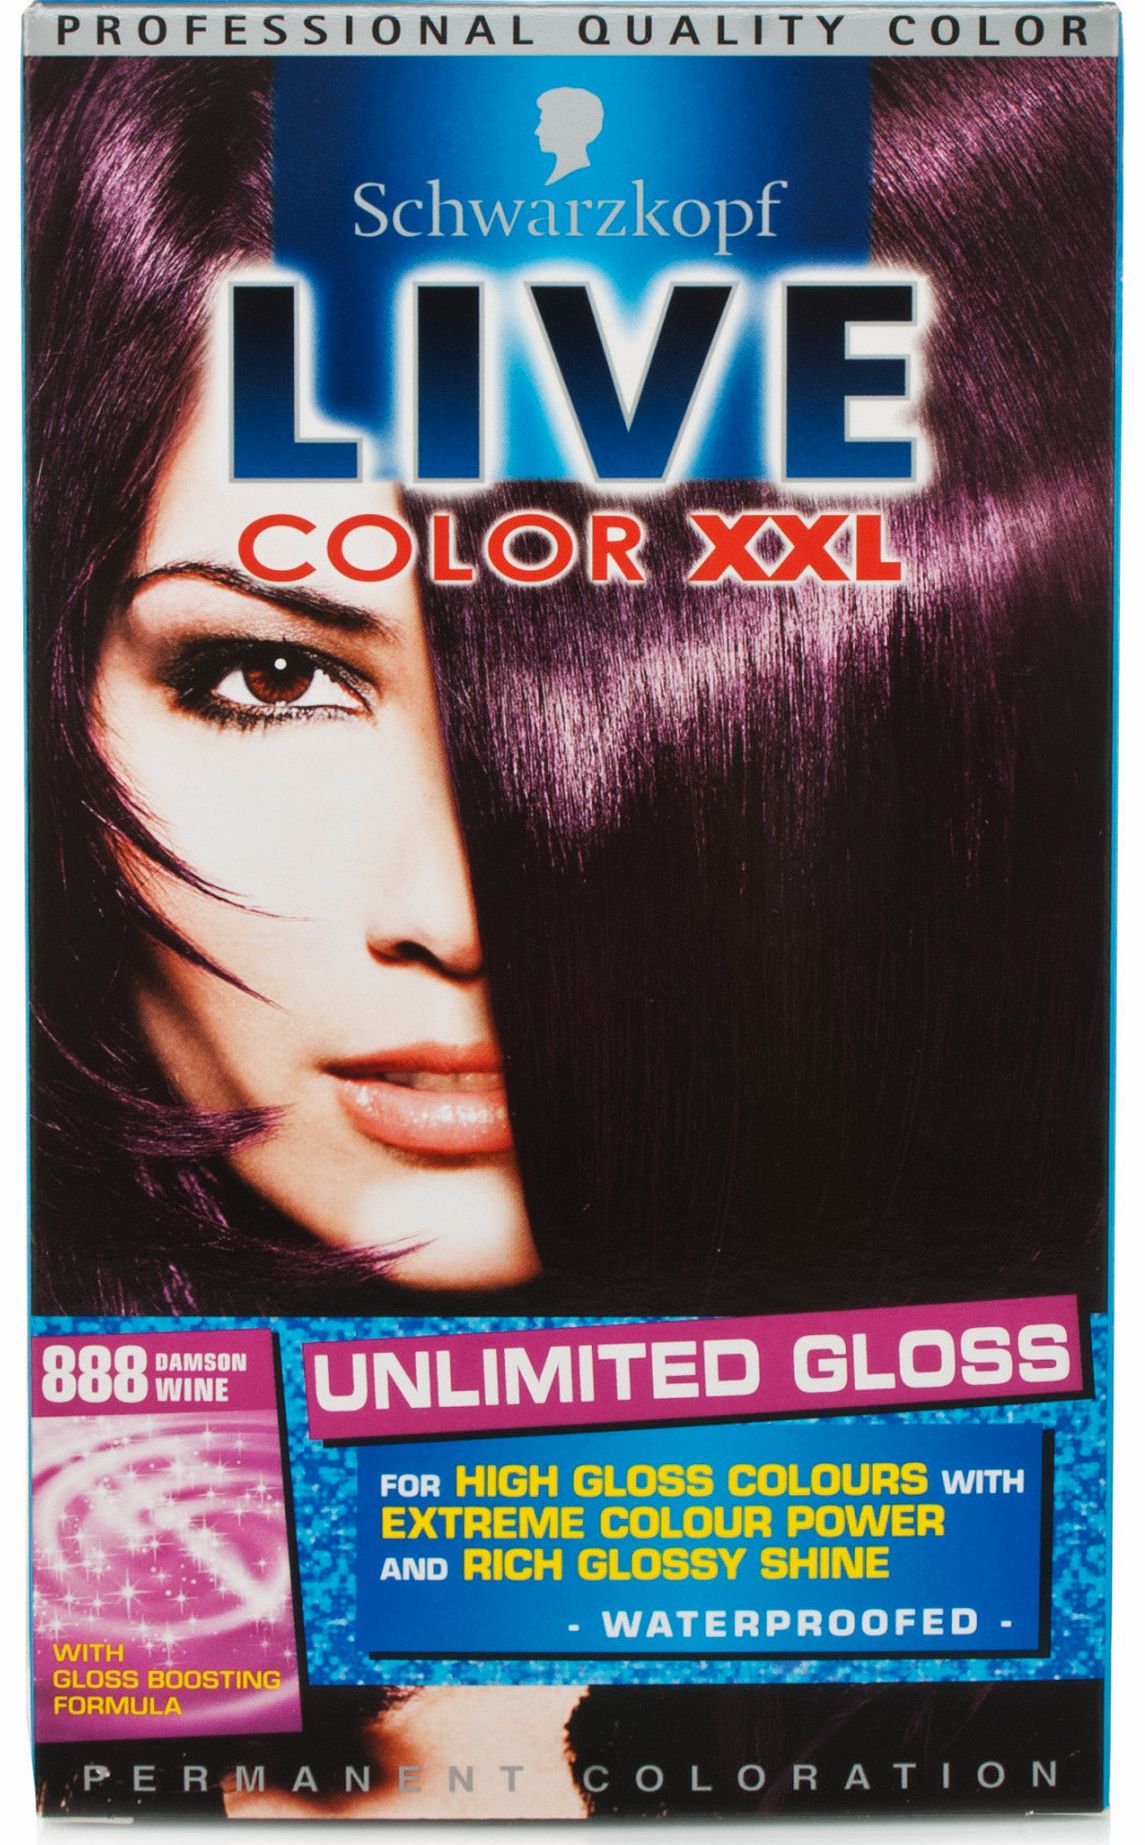 Schwarzkopf Live Colour XXL Unlimited Gloss 888